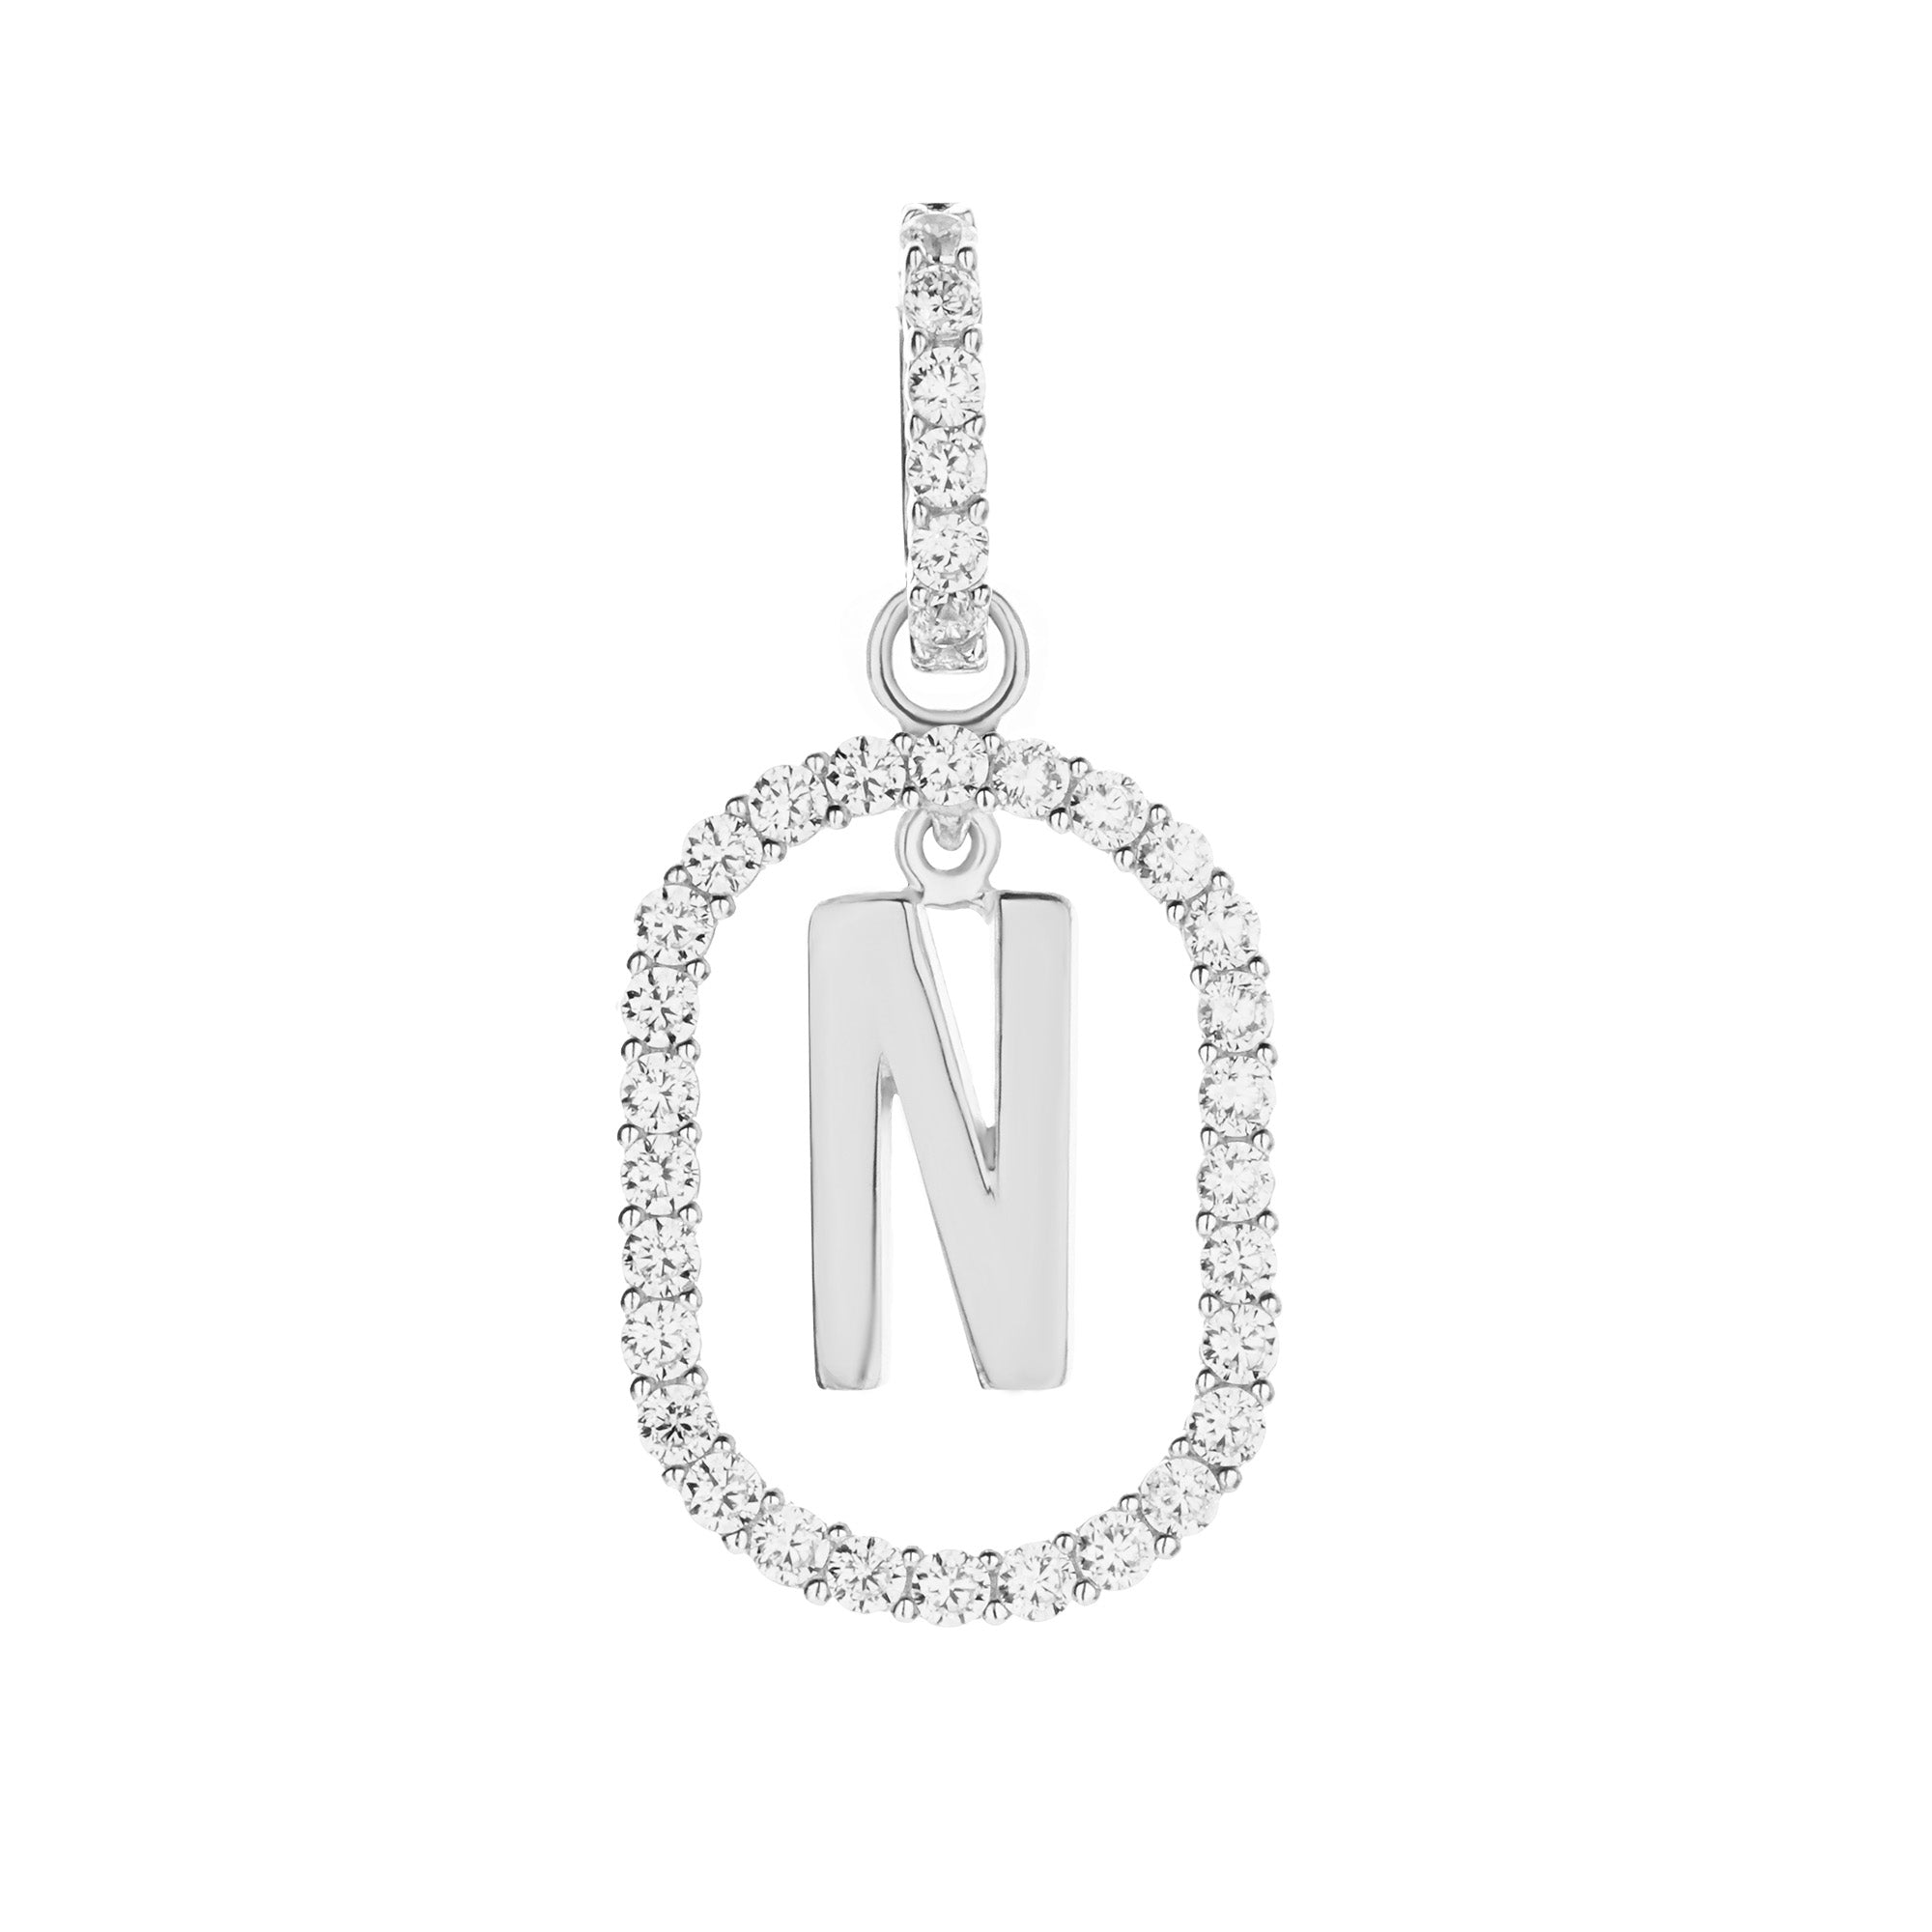 Aerin N Gold pendant - Initial Pendant - Juene Jewelry